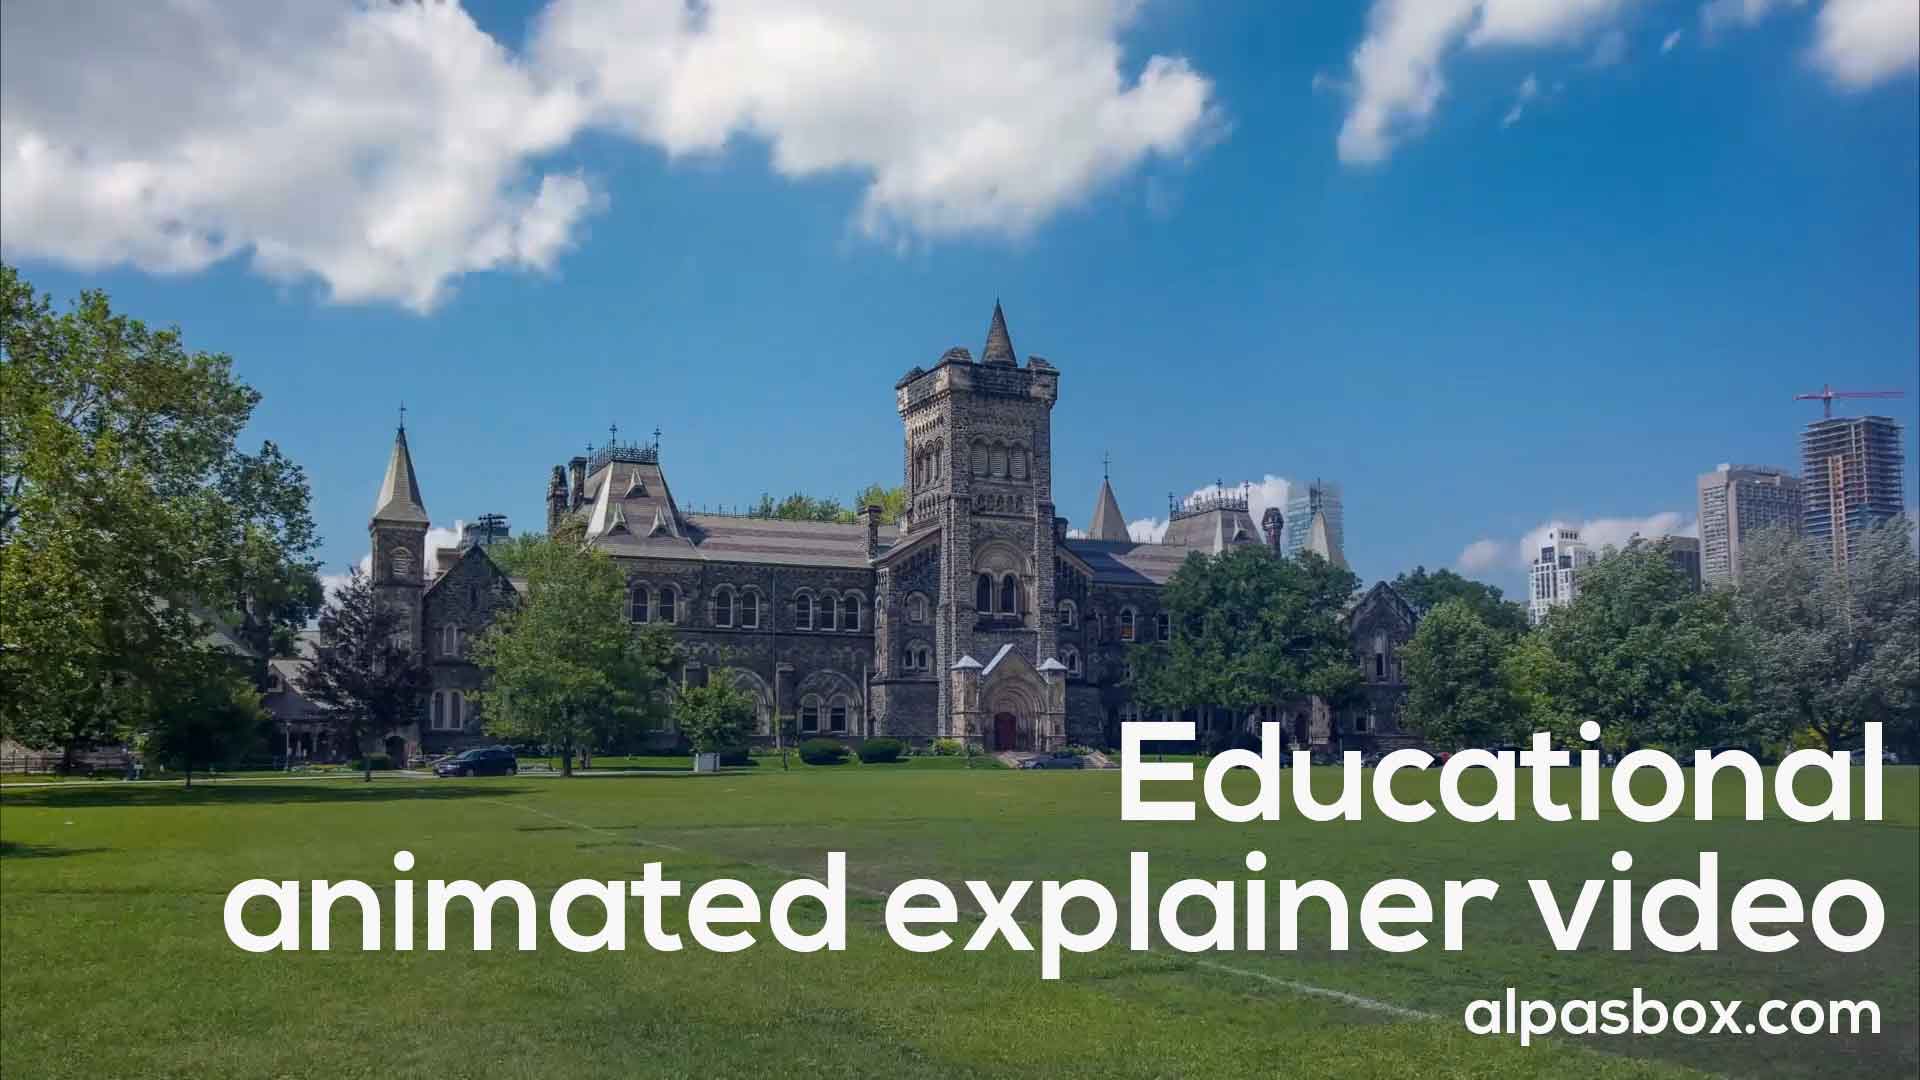 Educational animated explainer video